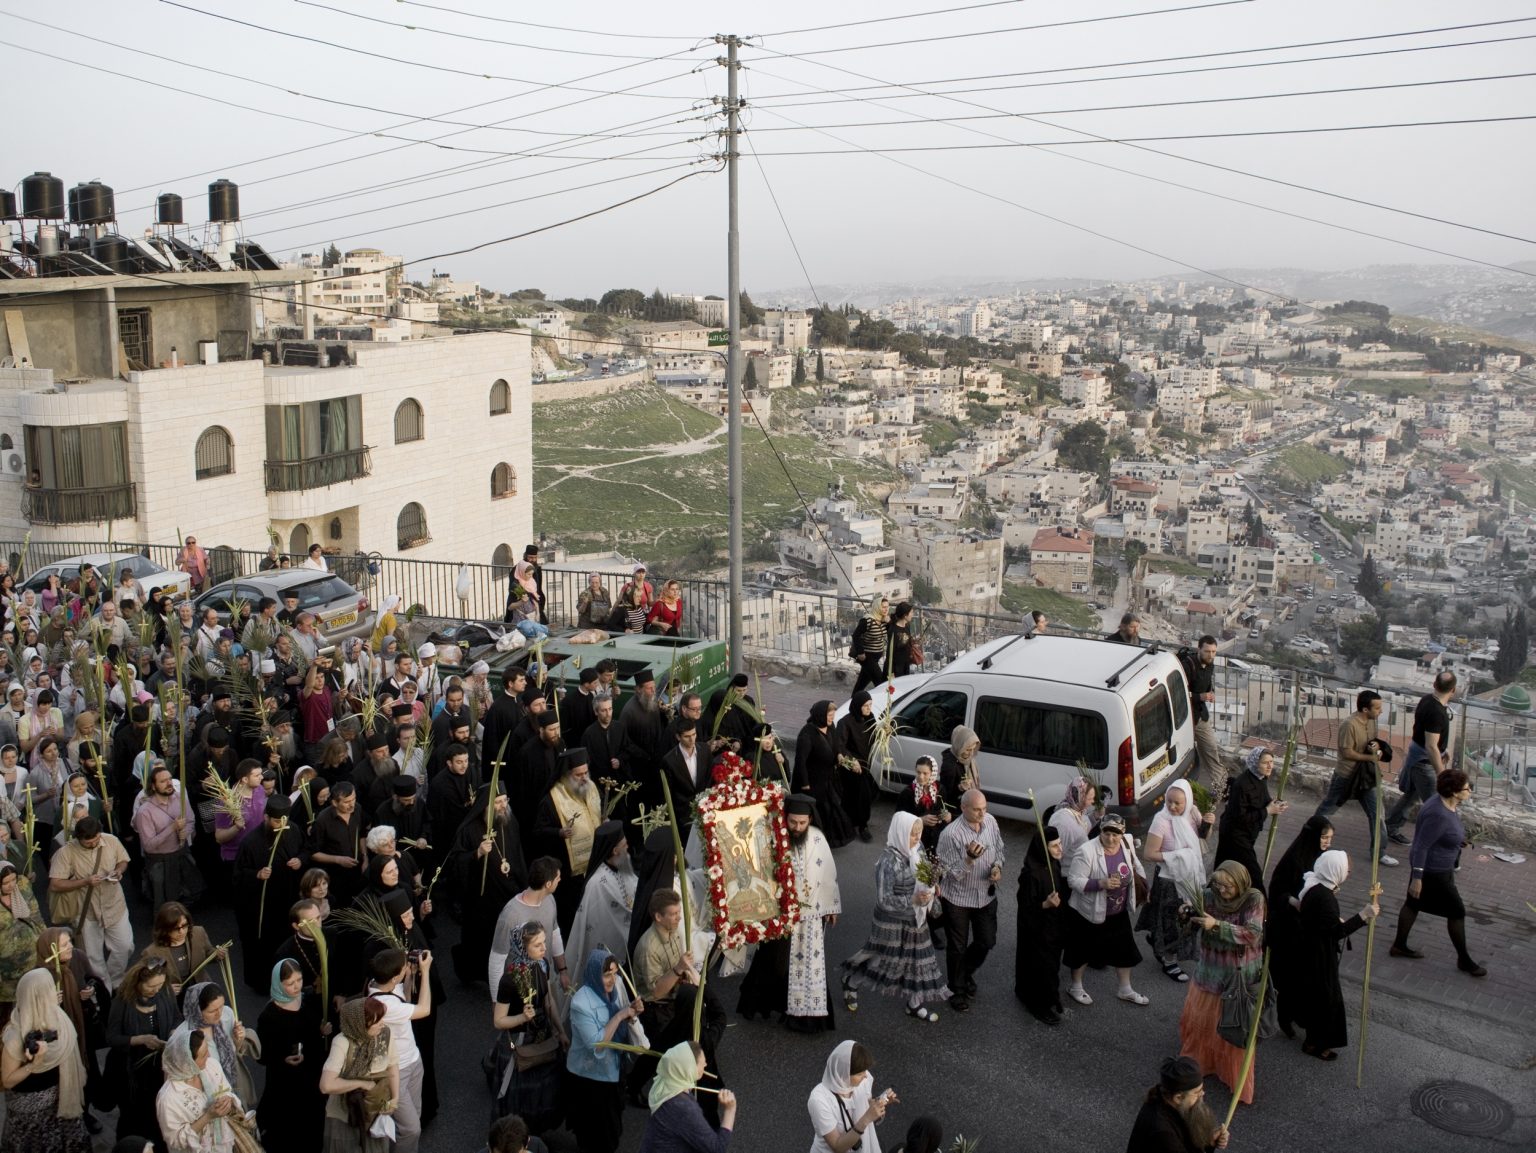 Greek Orthodox Christians during the Palm Sunday in East Jerusalem celebrating the entrance of Jesus in Jerusalem.